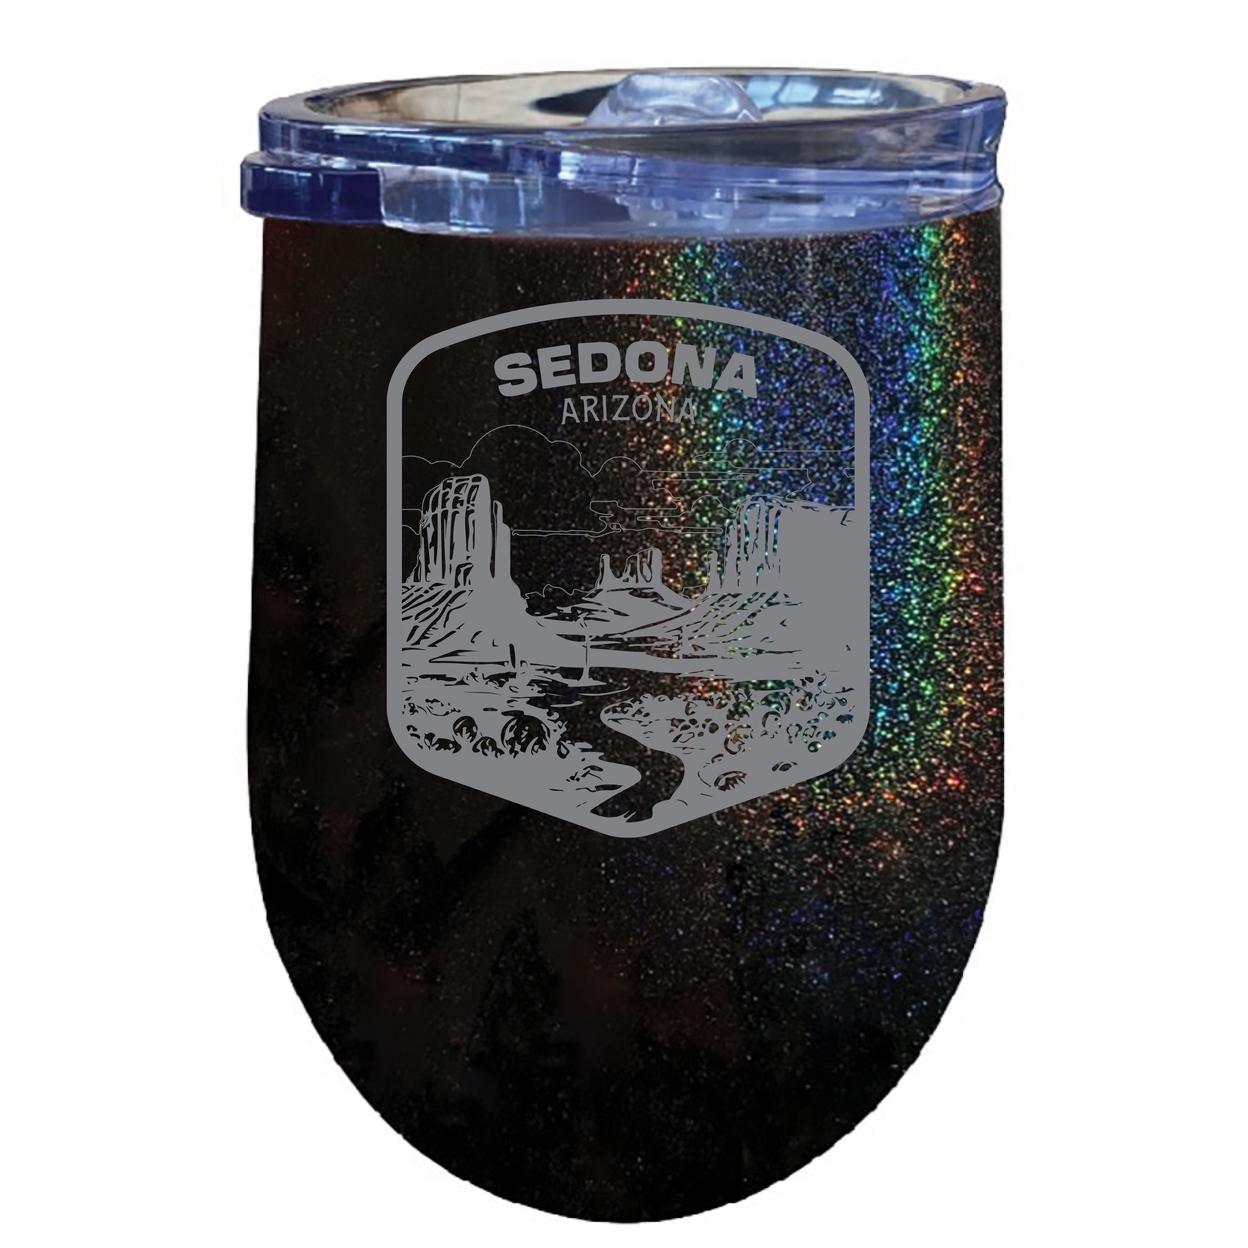 Sedona Arizona Souvenir 12 Oz Engraved Insulated Wine Stainless Steel Tumbler - Rainbow Glitter Gray,,2-Pack